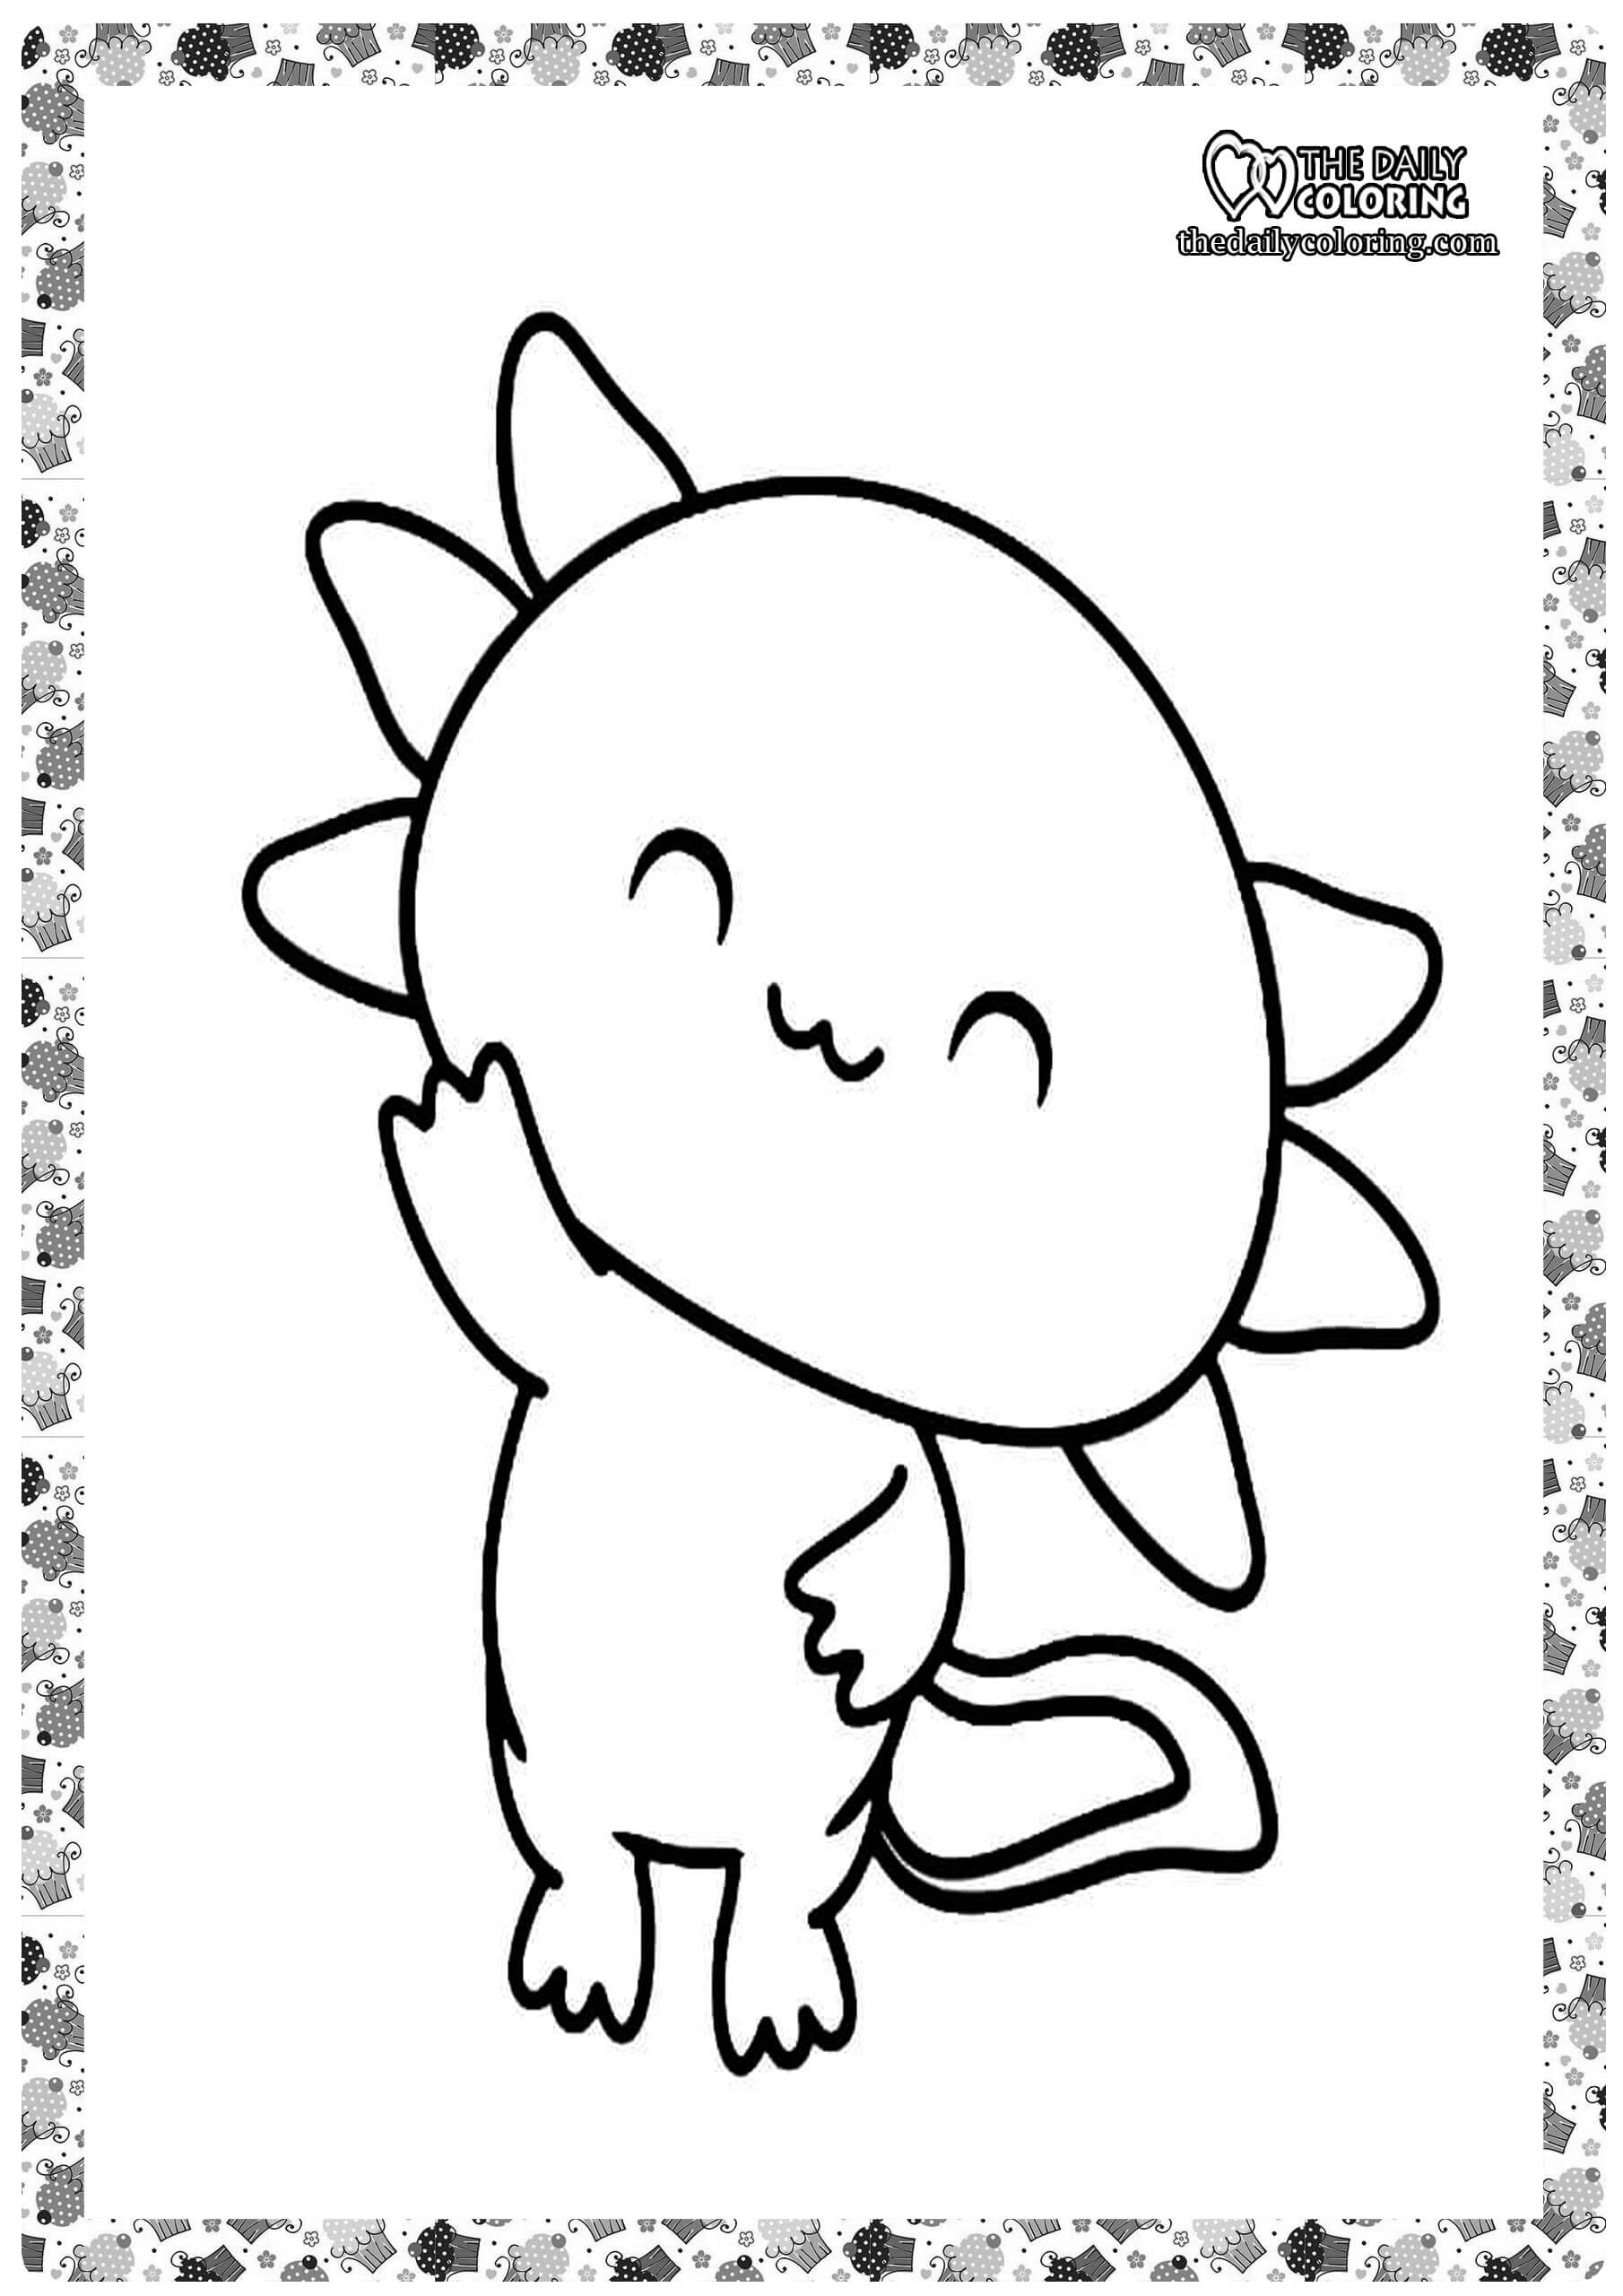 axolotl-coloring-page